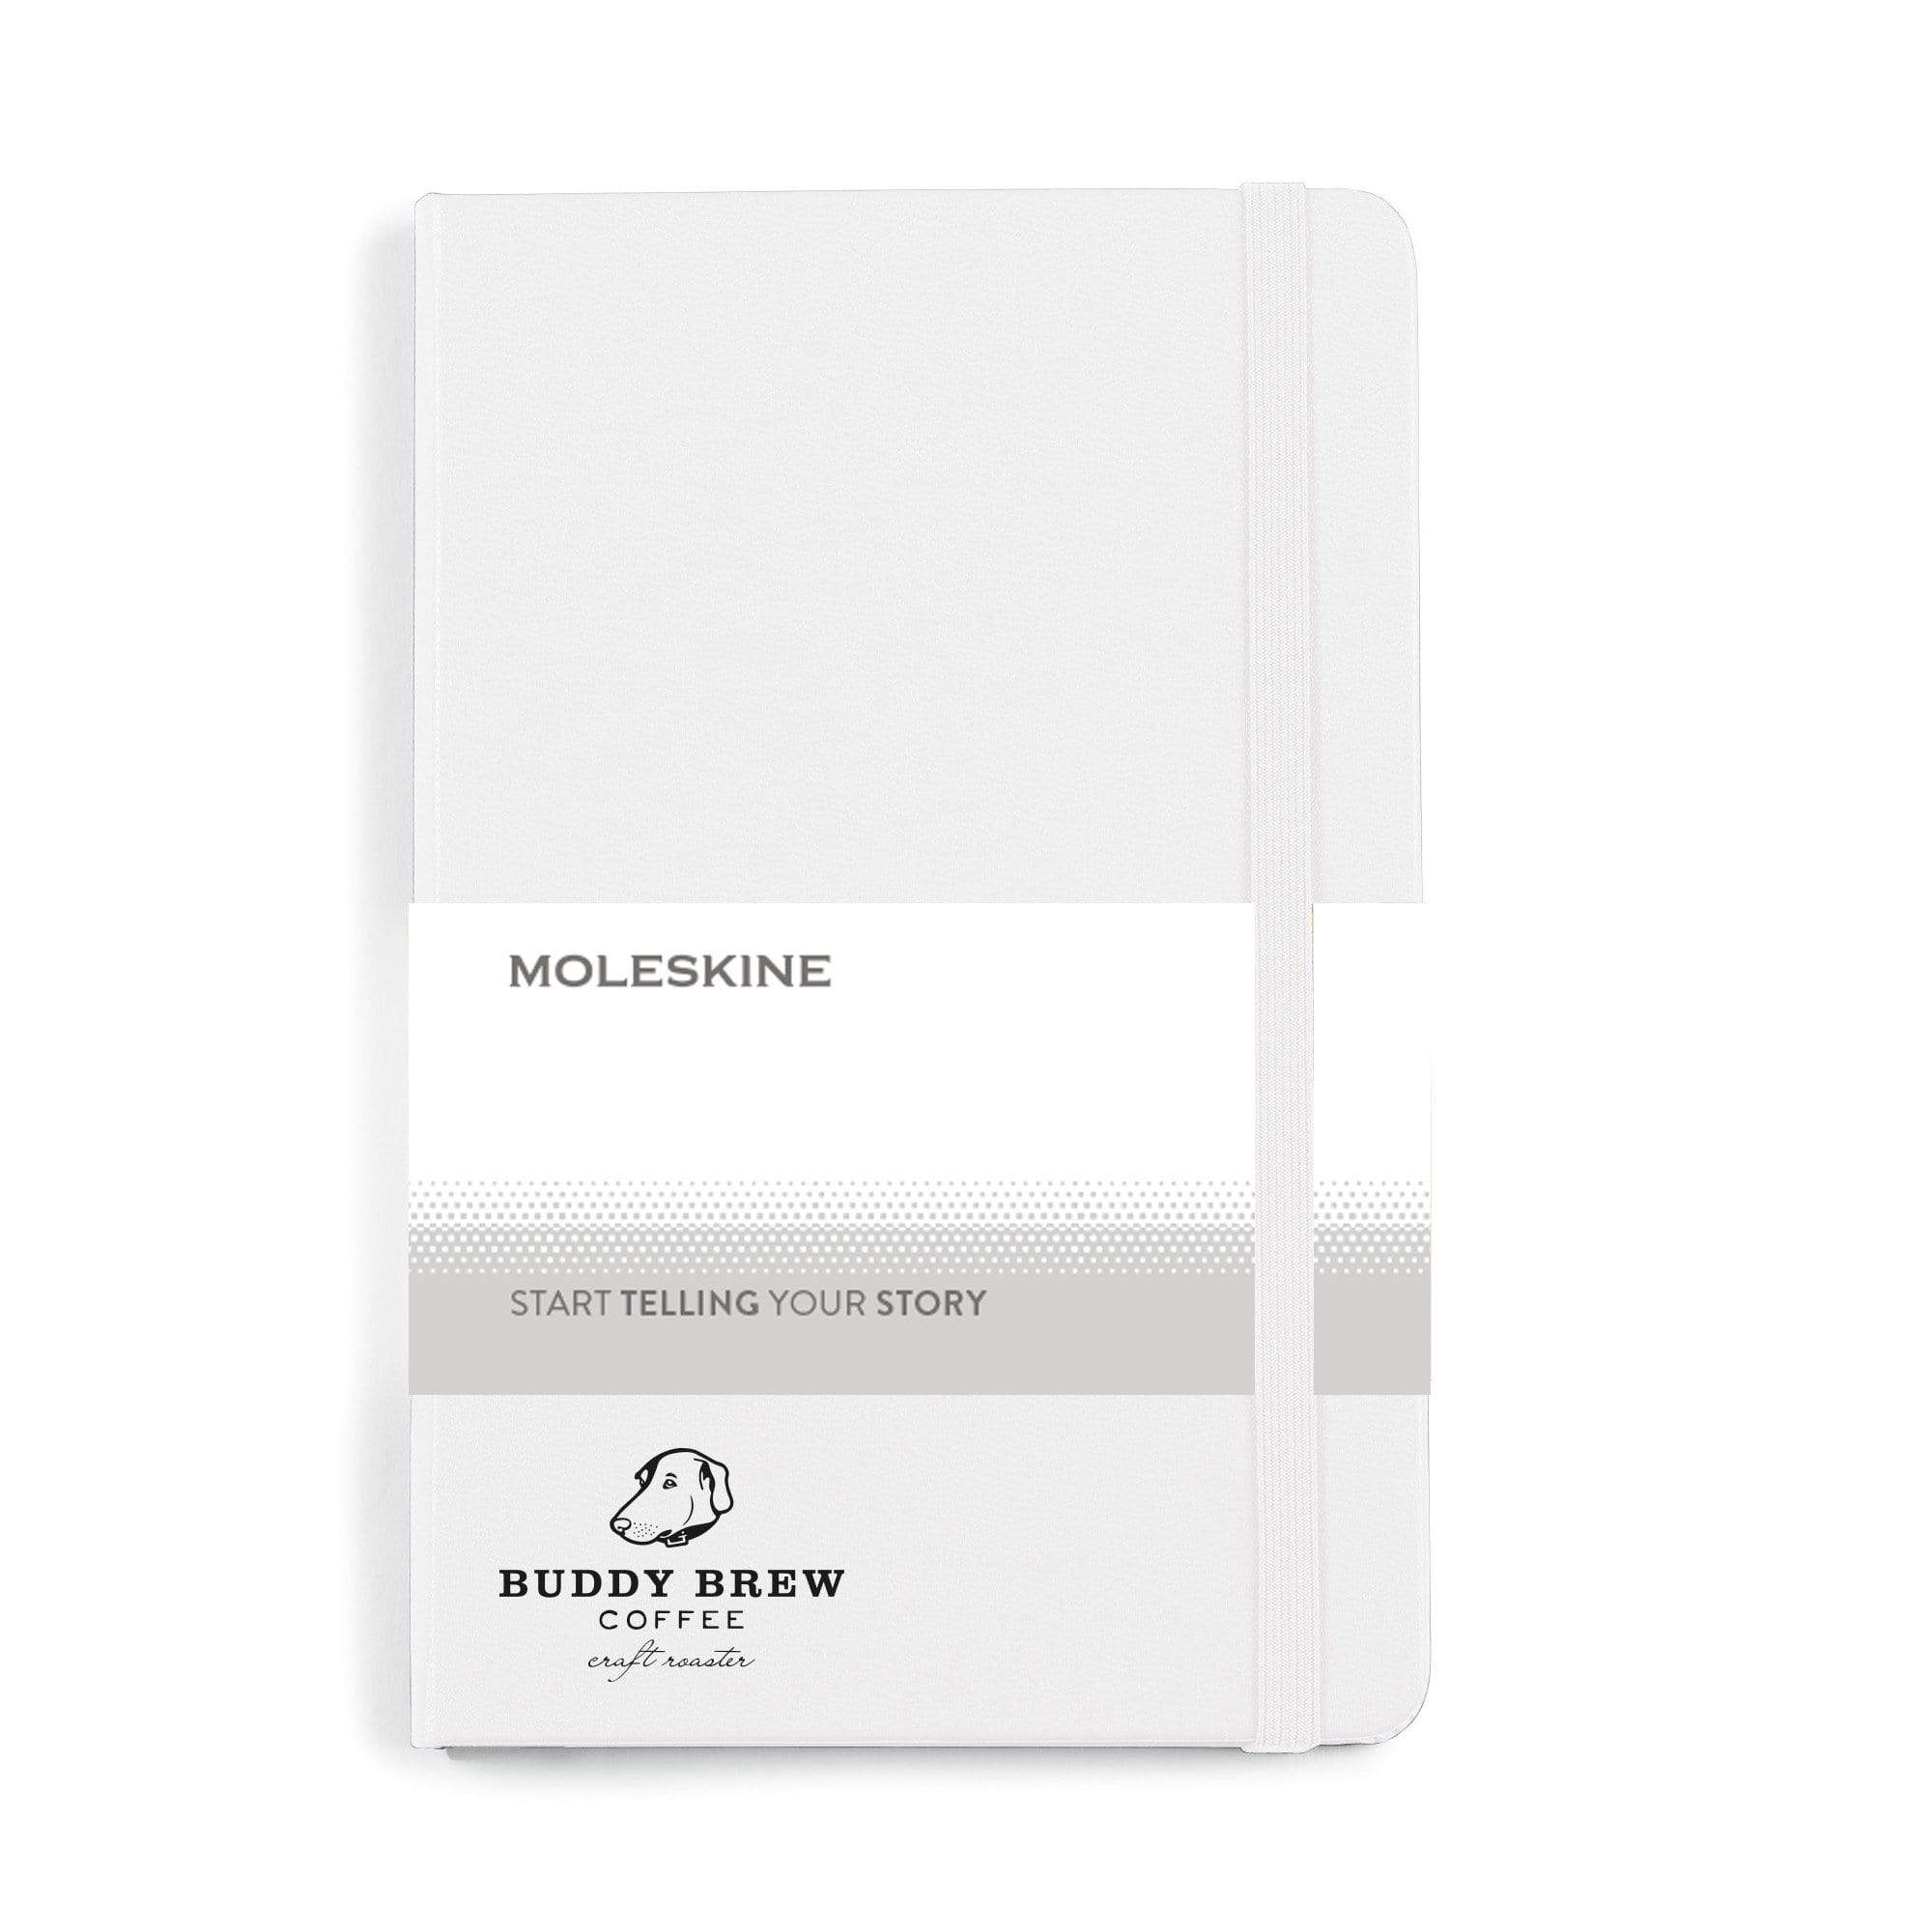 Moleskine - 25 piece minimum Accessories OSFA / White Moleskine® Hard Cover Ruled Medium Notebook (4.5" x 7")